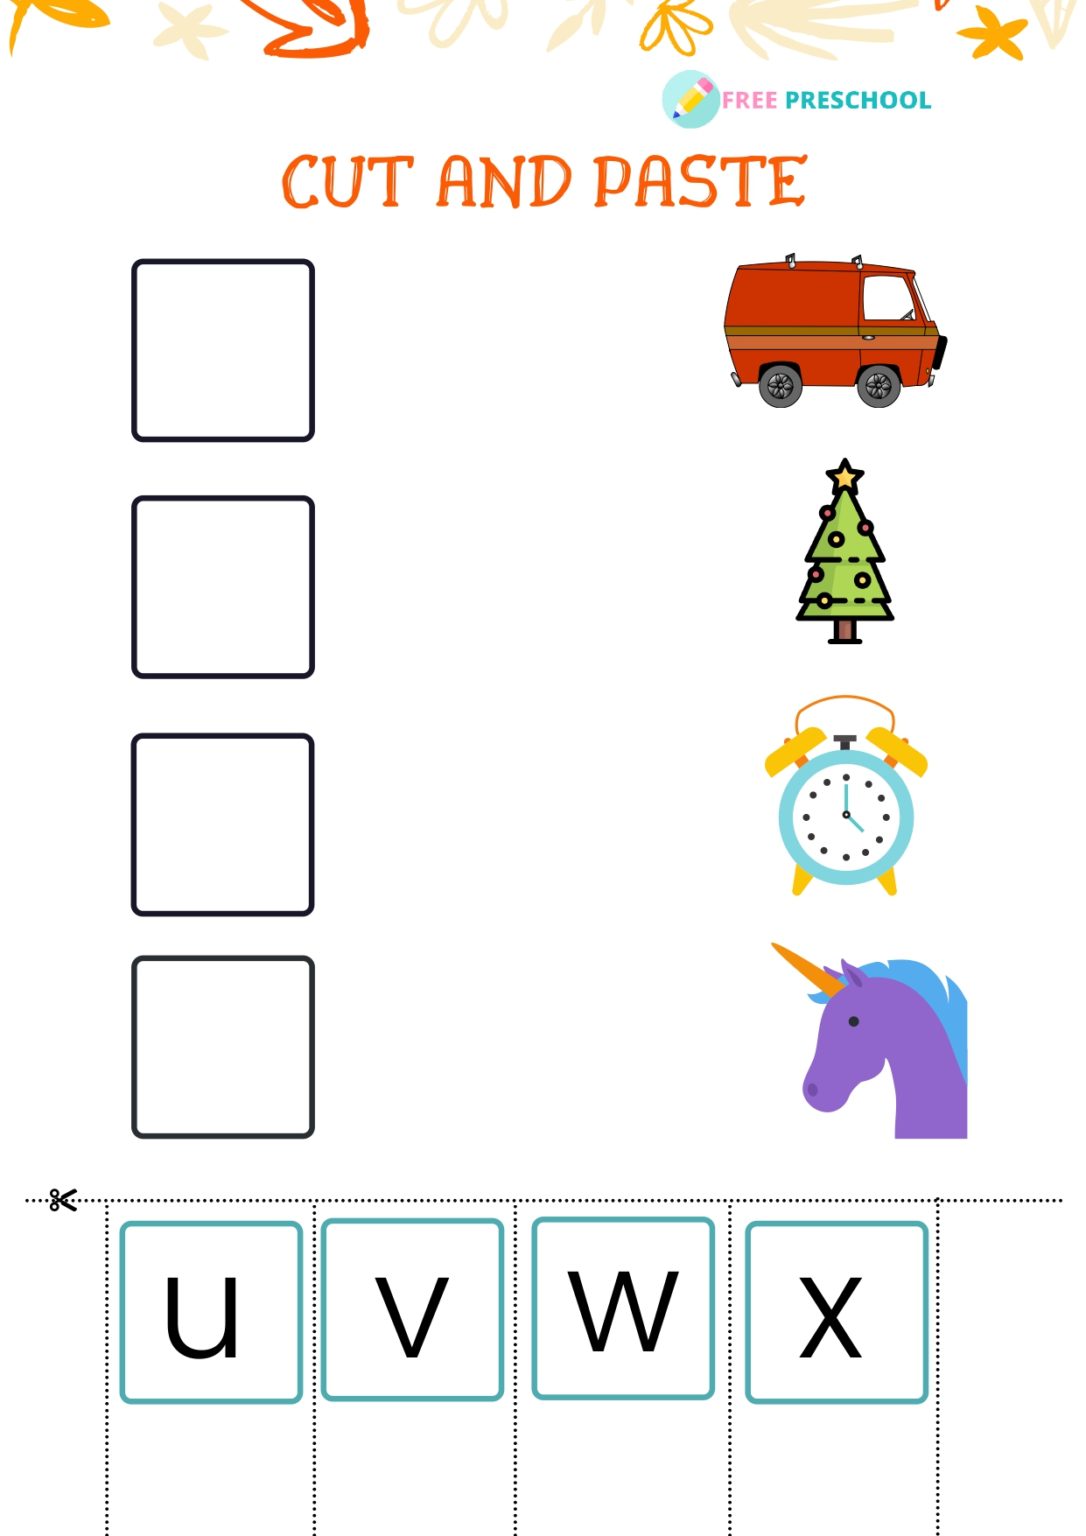 Cut and Paste Worksheets for Preschool Free Preschool